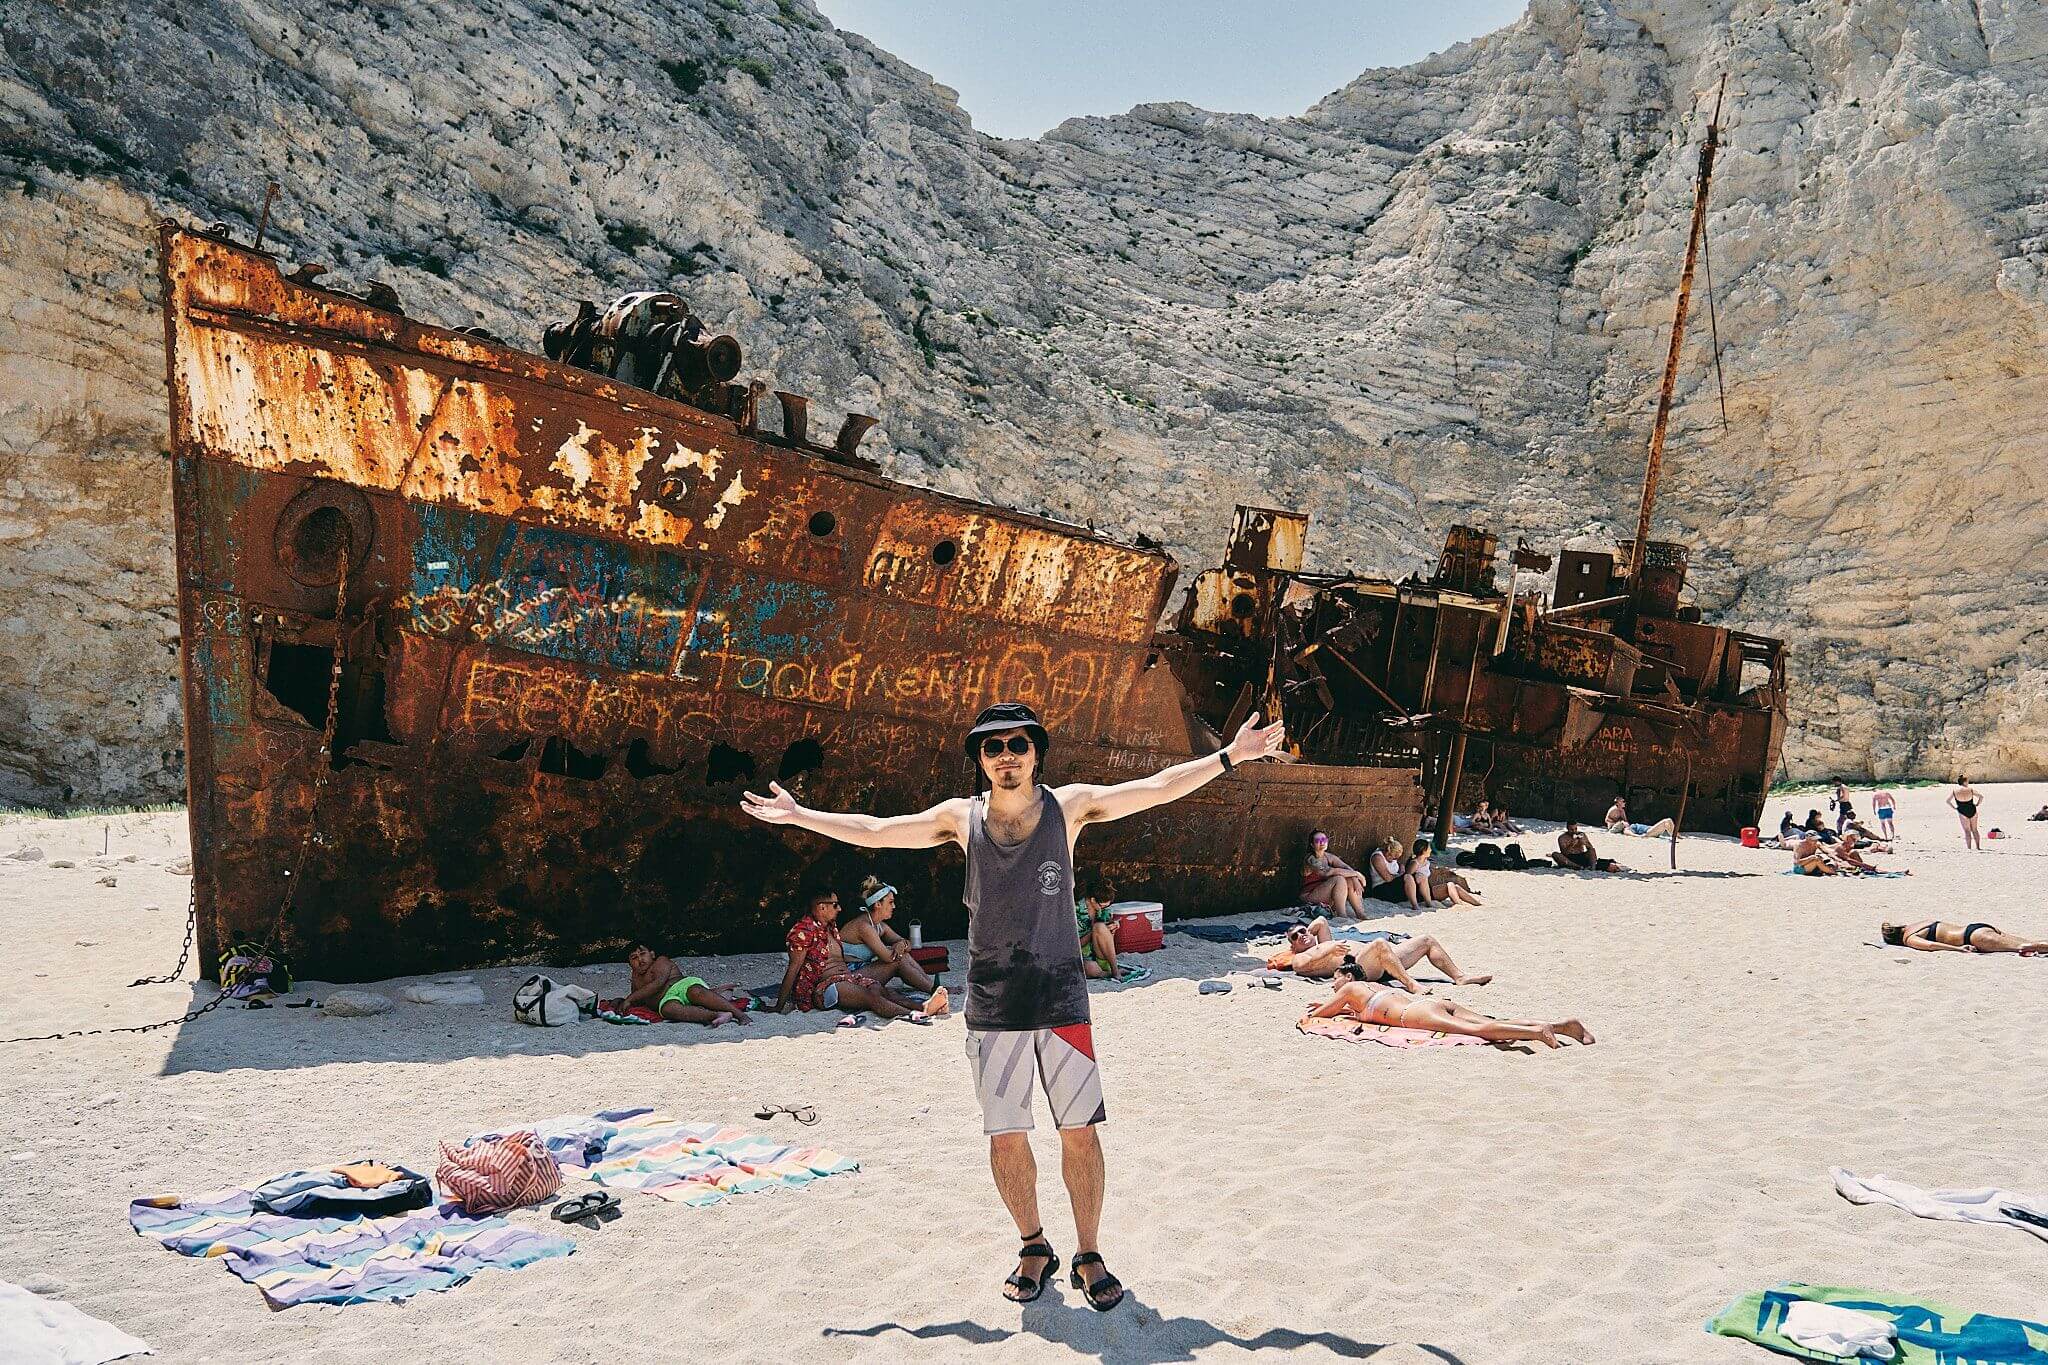 Greece 希臘｜沉船灣 Navagio ⎈ Shipwreck Beach｜湛藍清澈的避世絕景｜來當傑克船長探險此處吧！